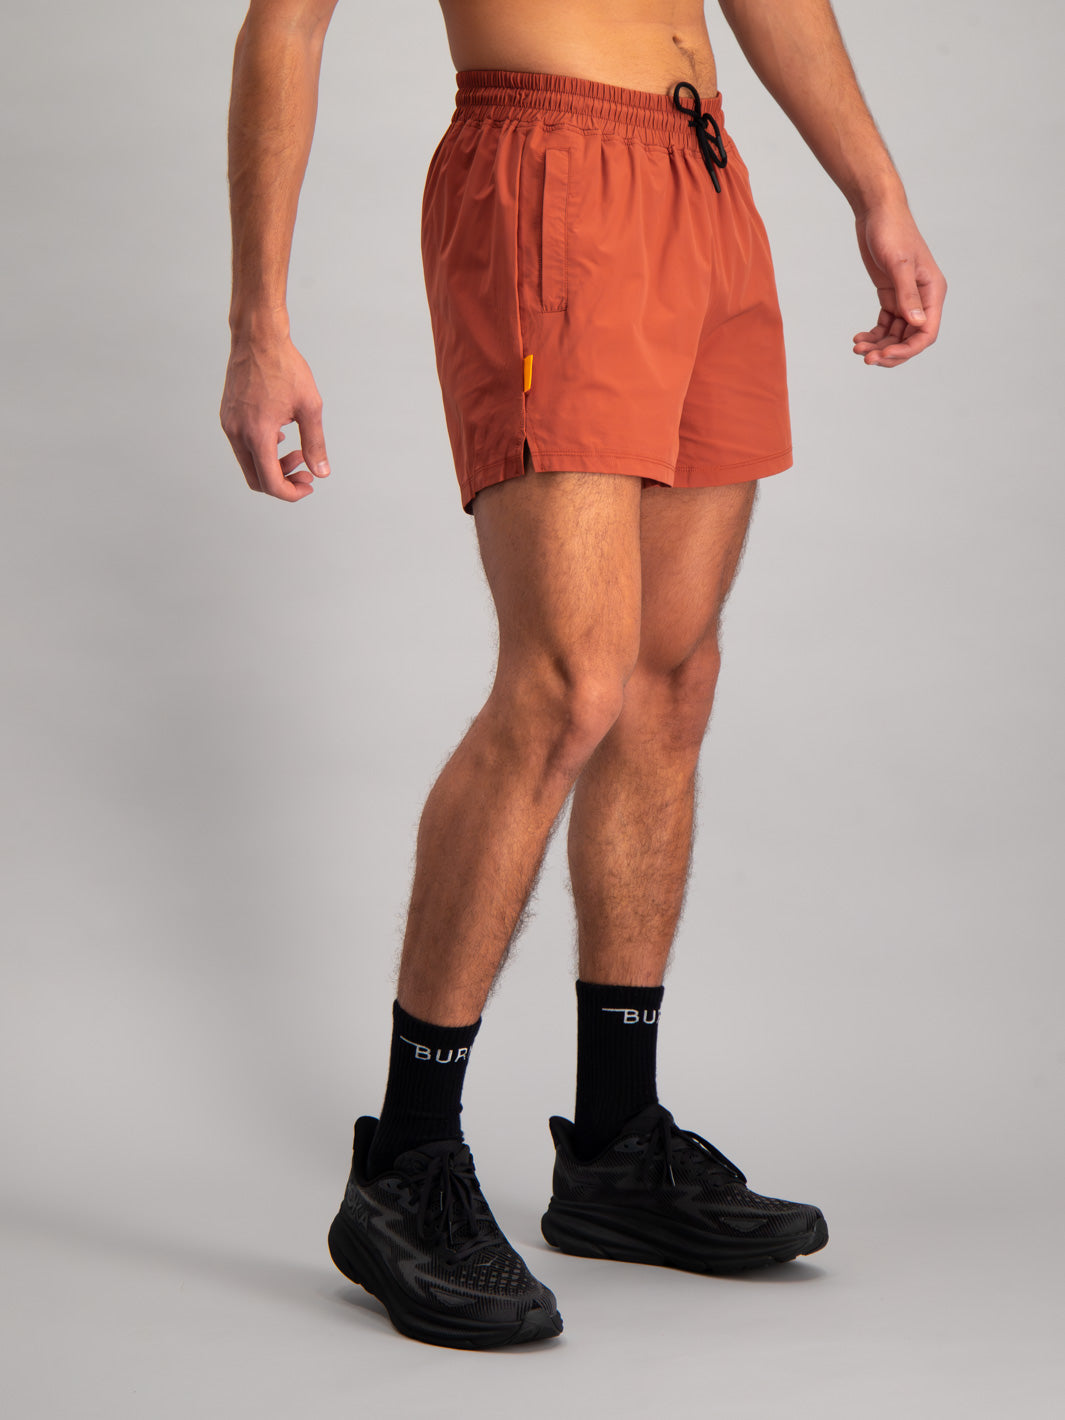 Burnt Studios Activewear 5-inch shorts in core rust side